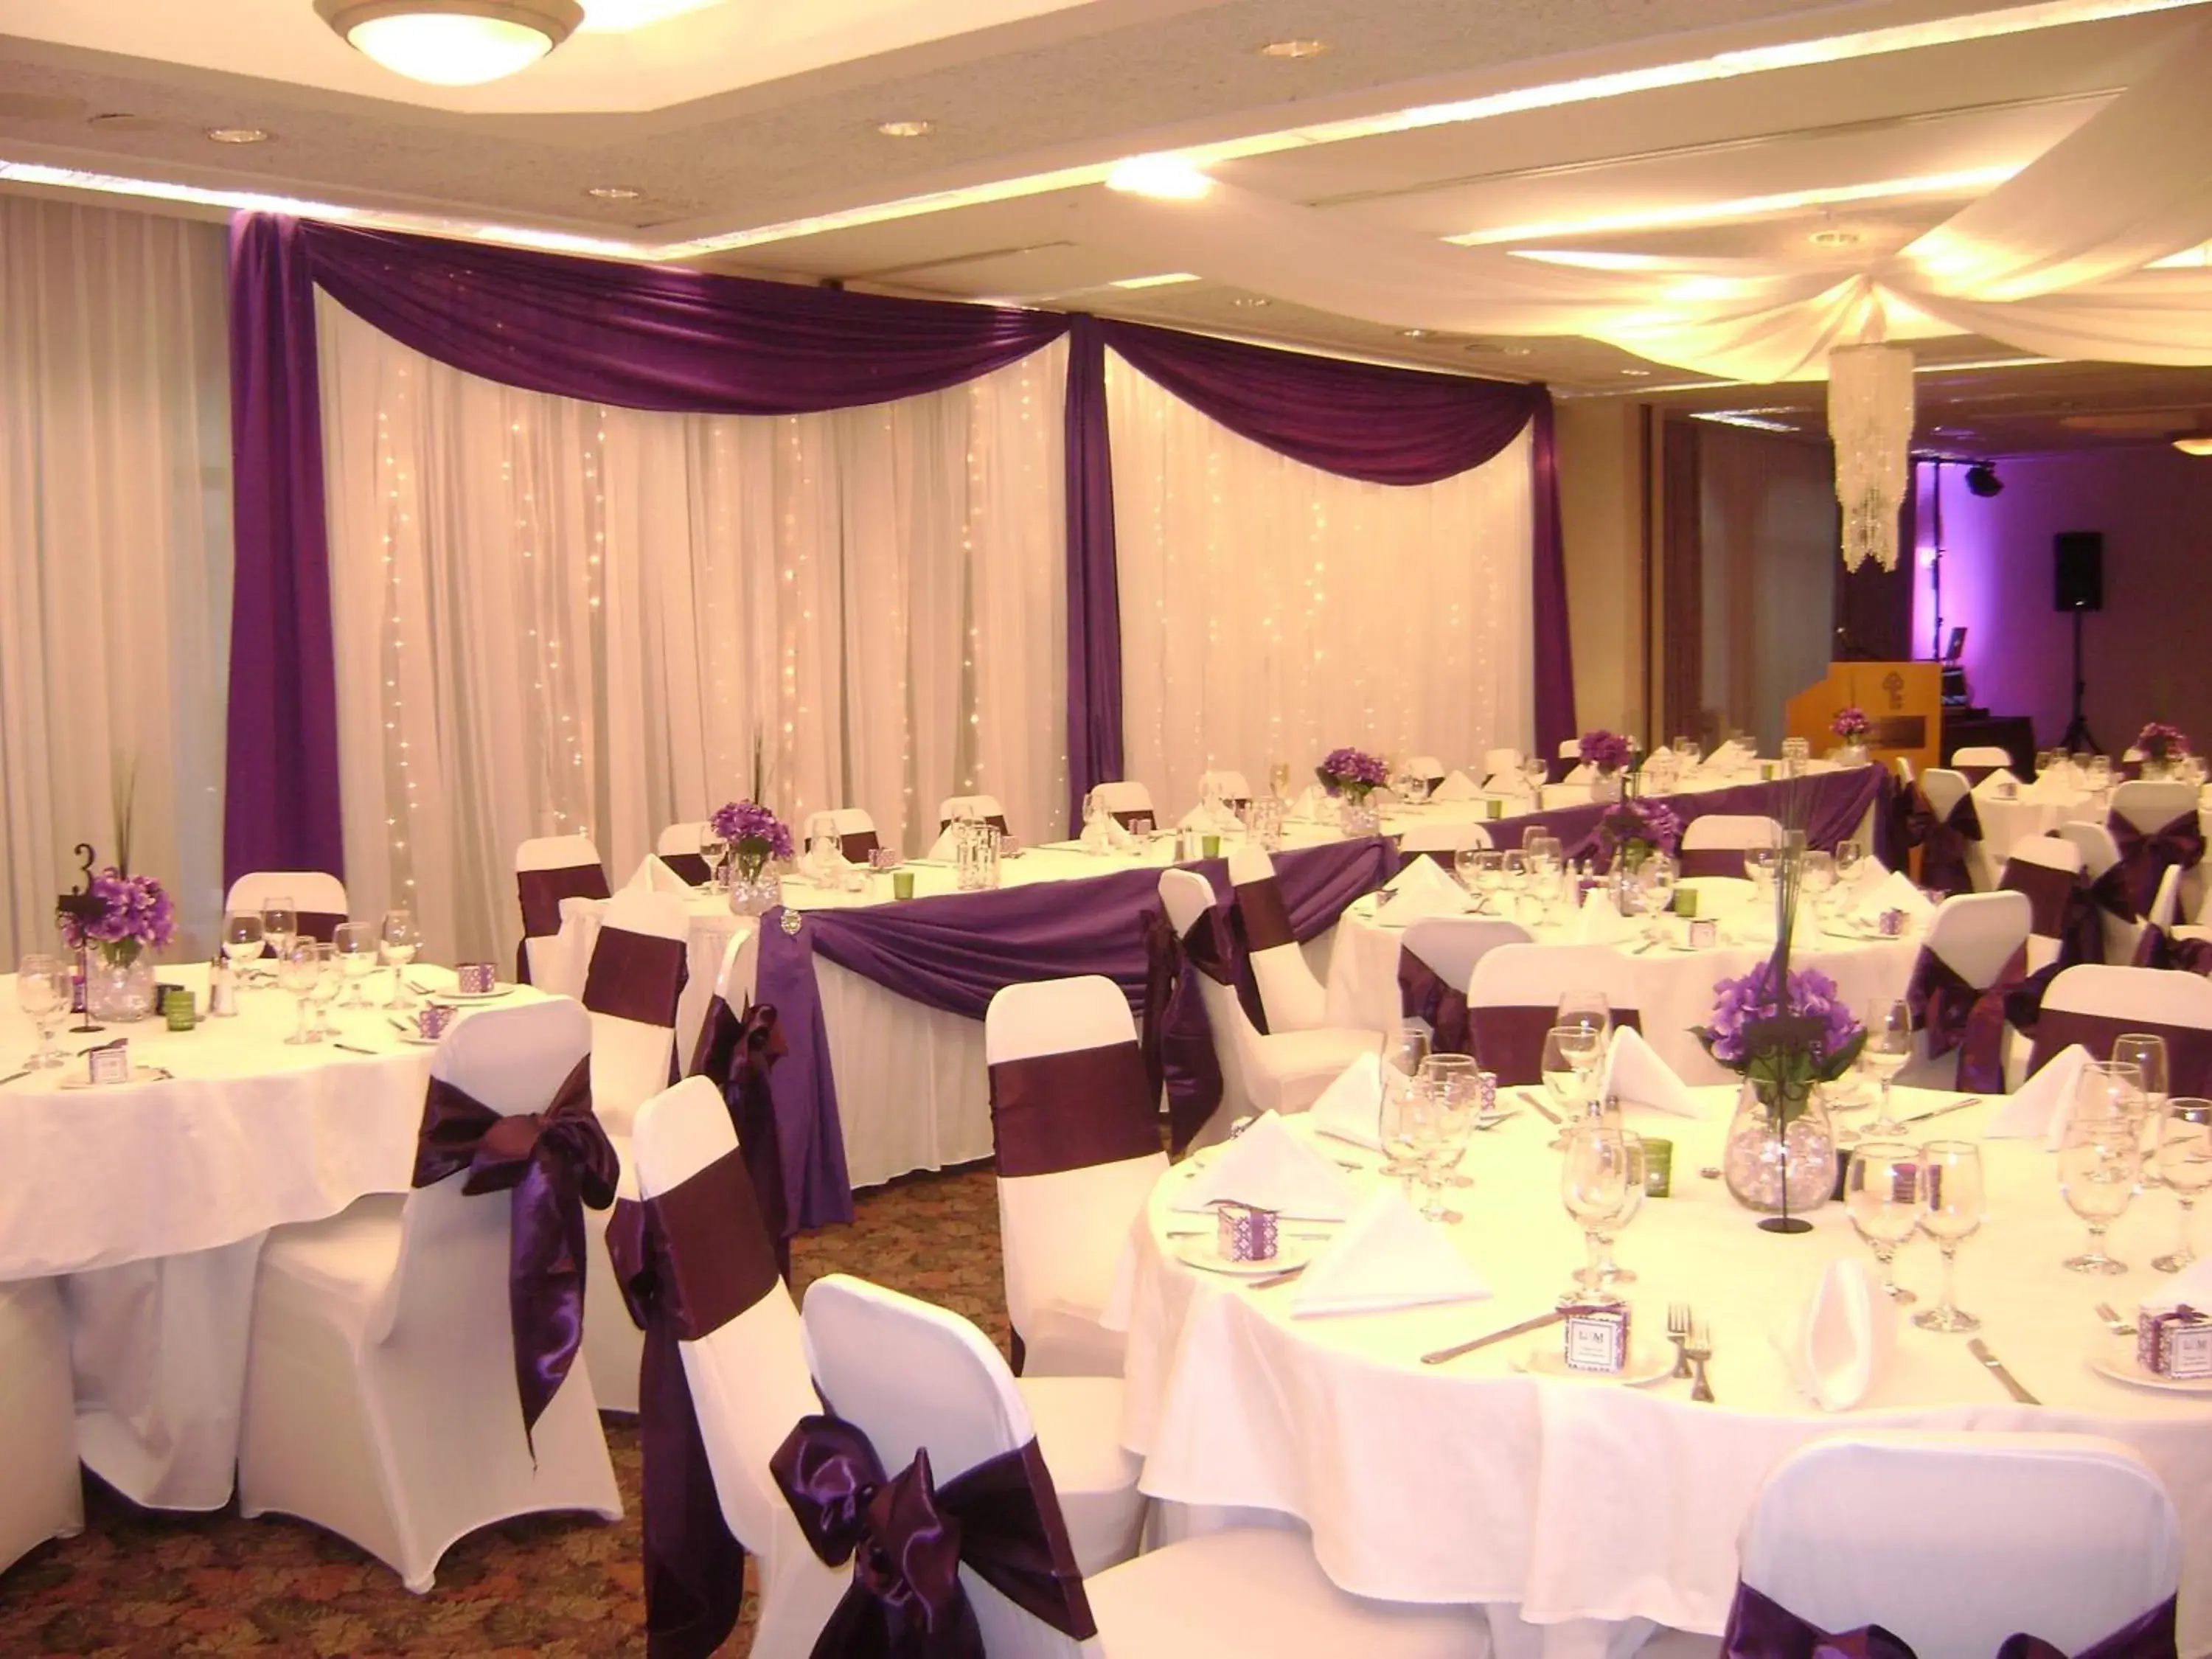 Banquet/Function facilities, Banquet Facilities in Cartier Place Suite Hotel